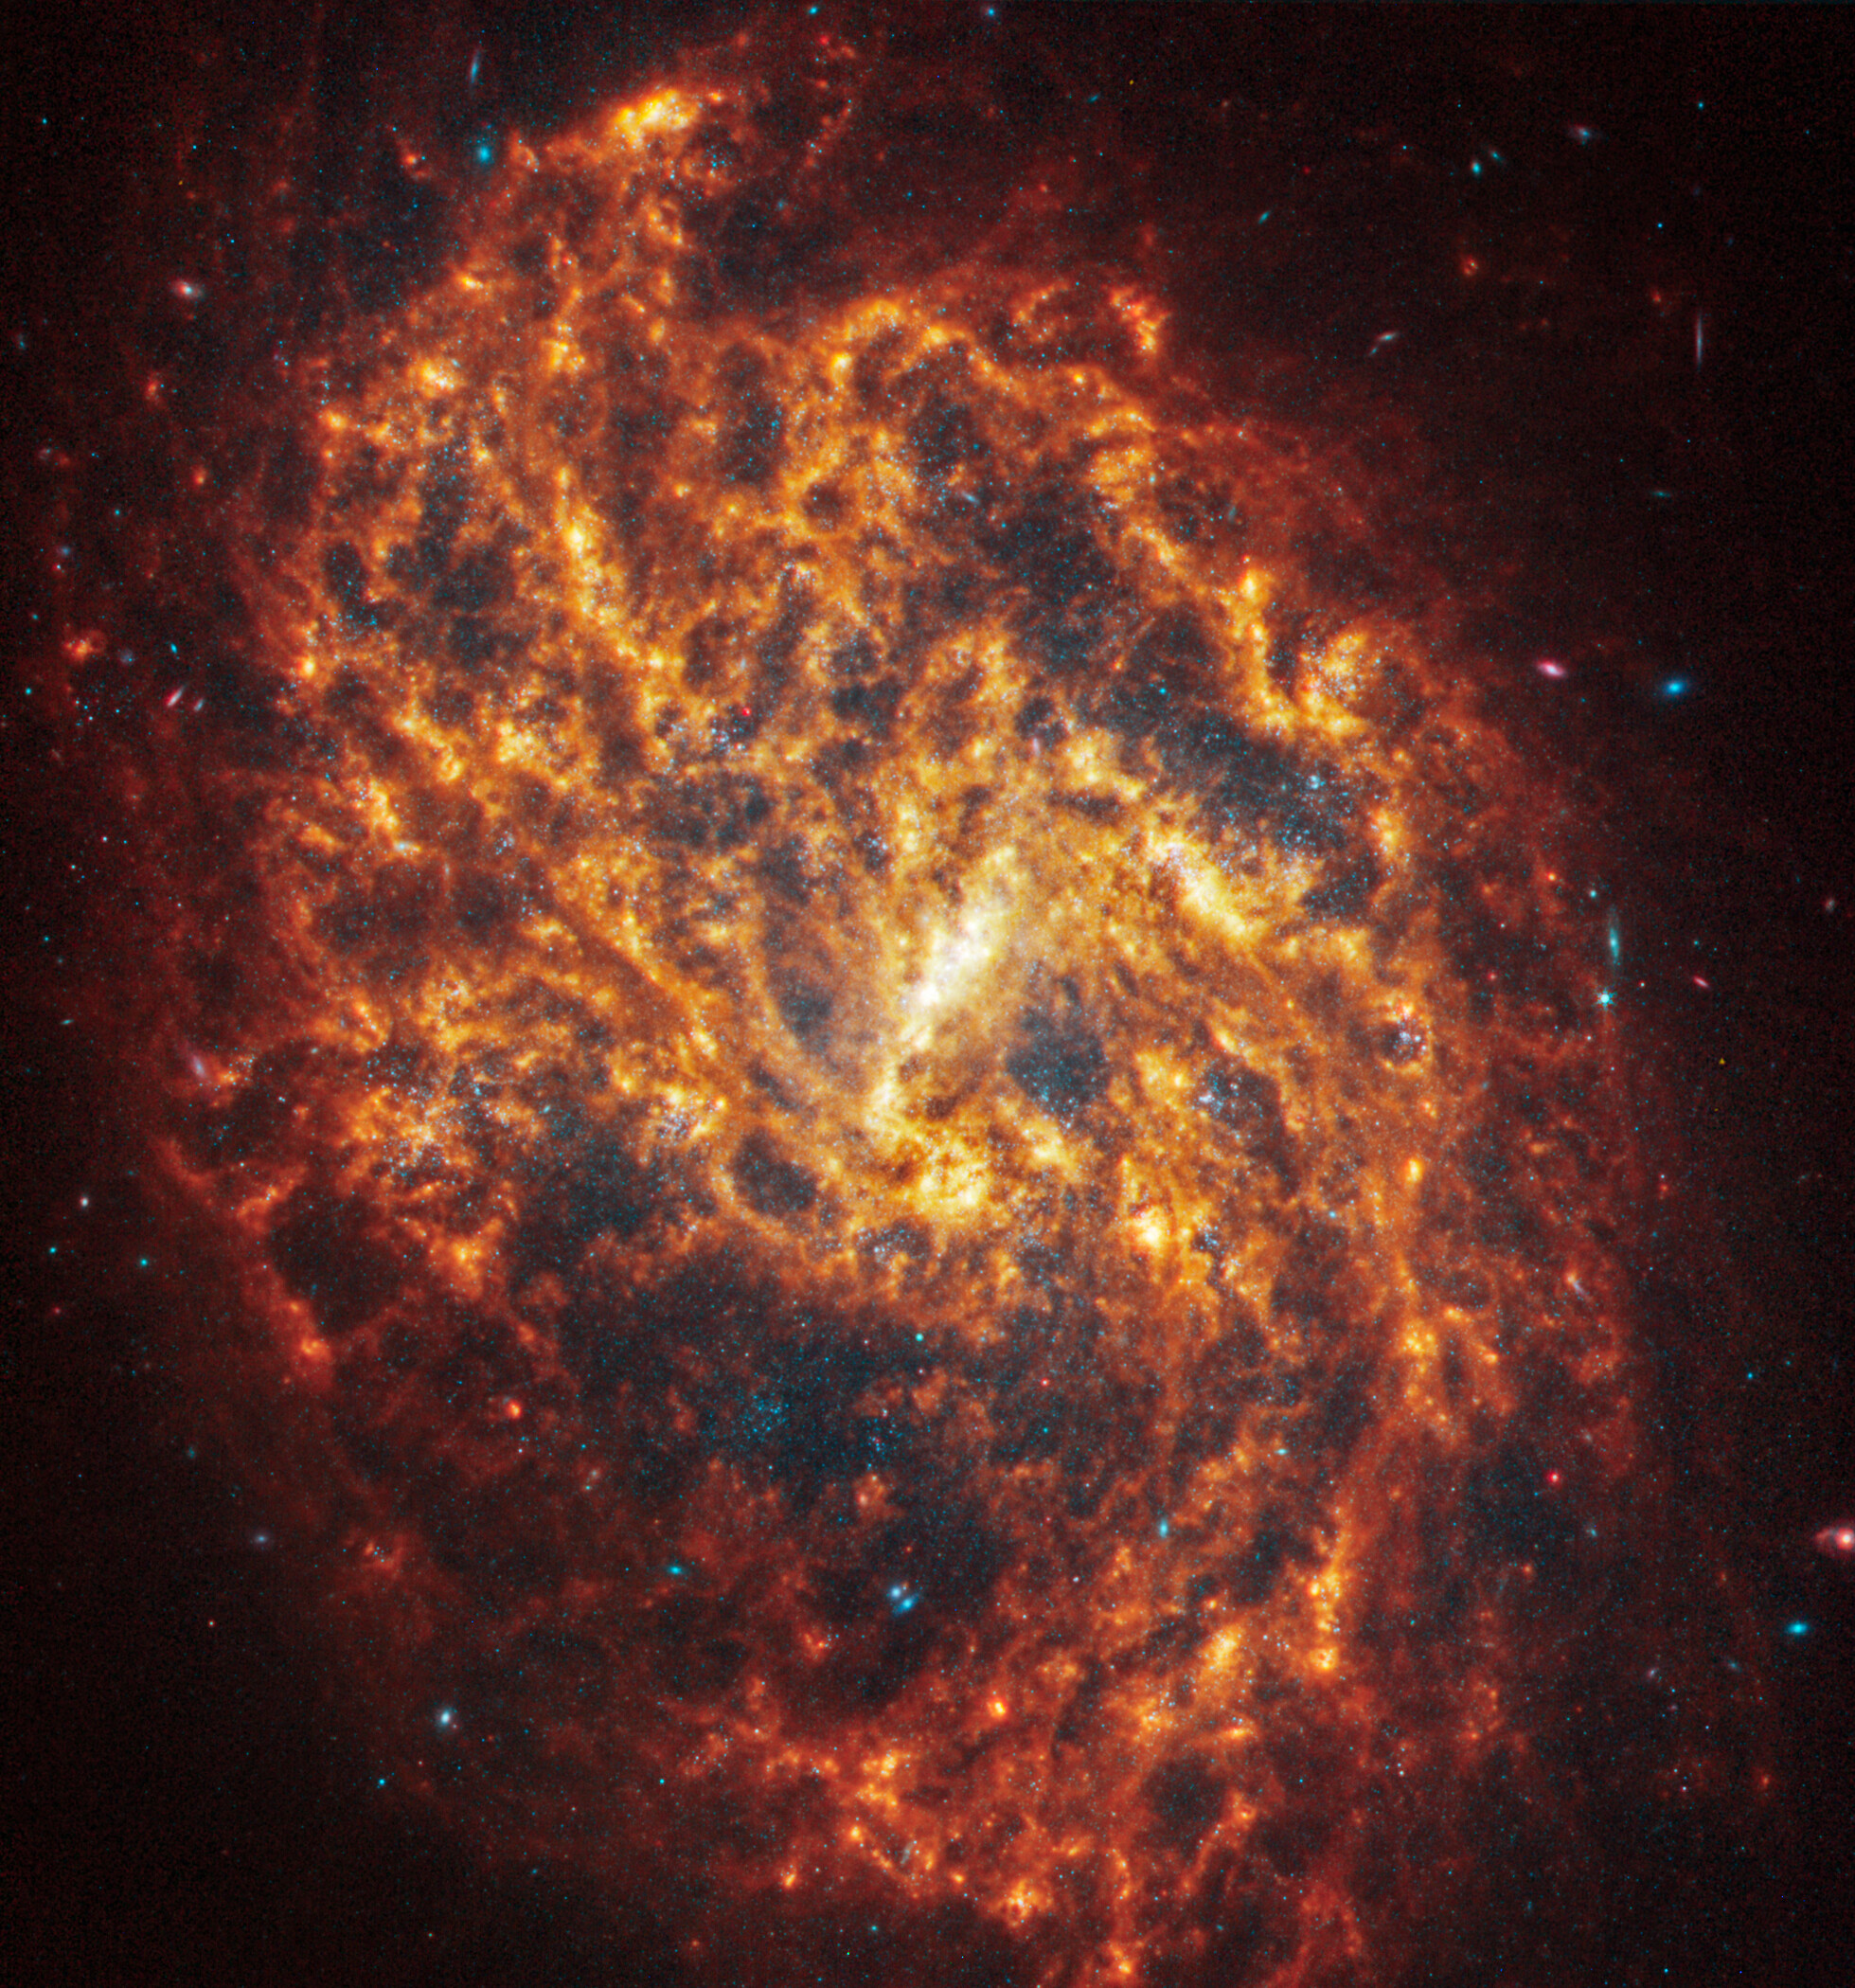 Webb’s image of NGC 1087 